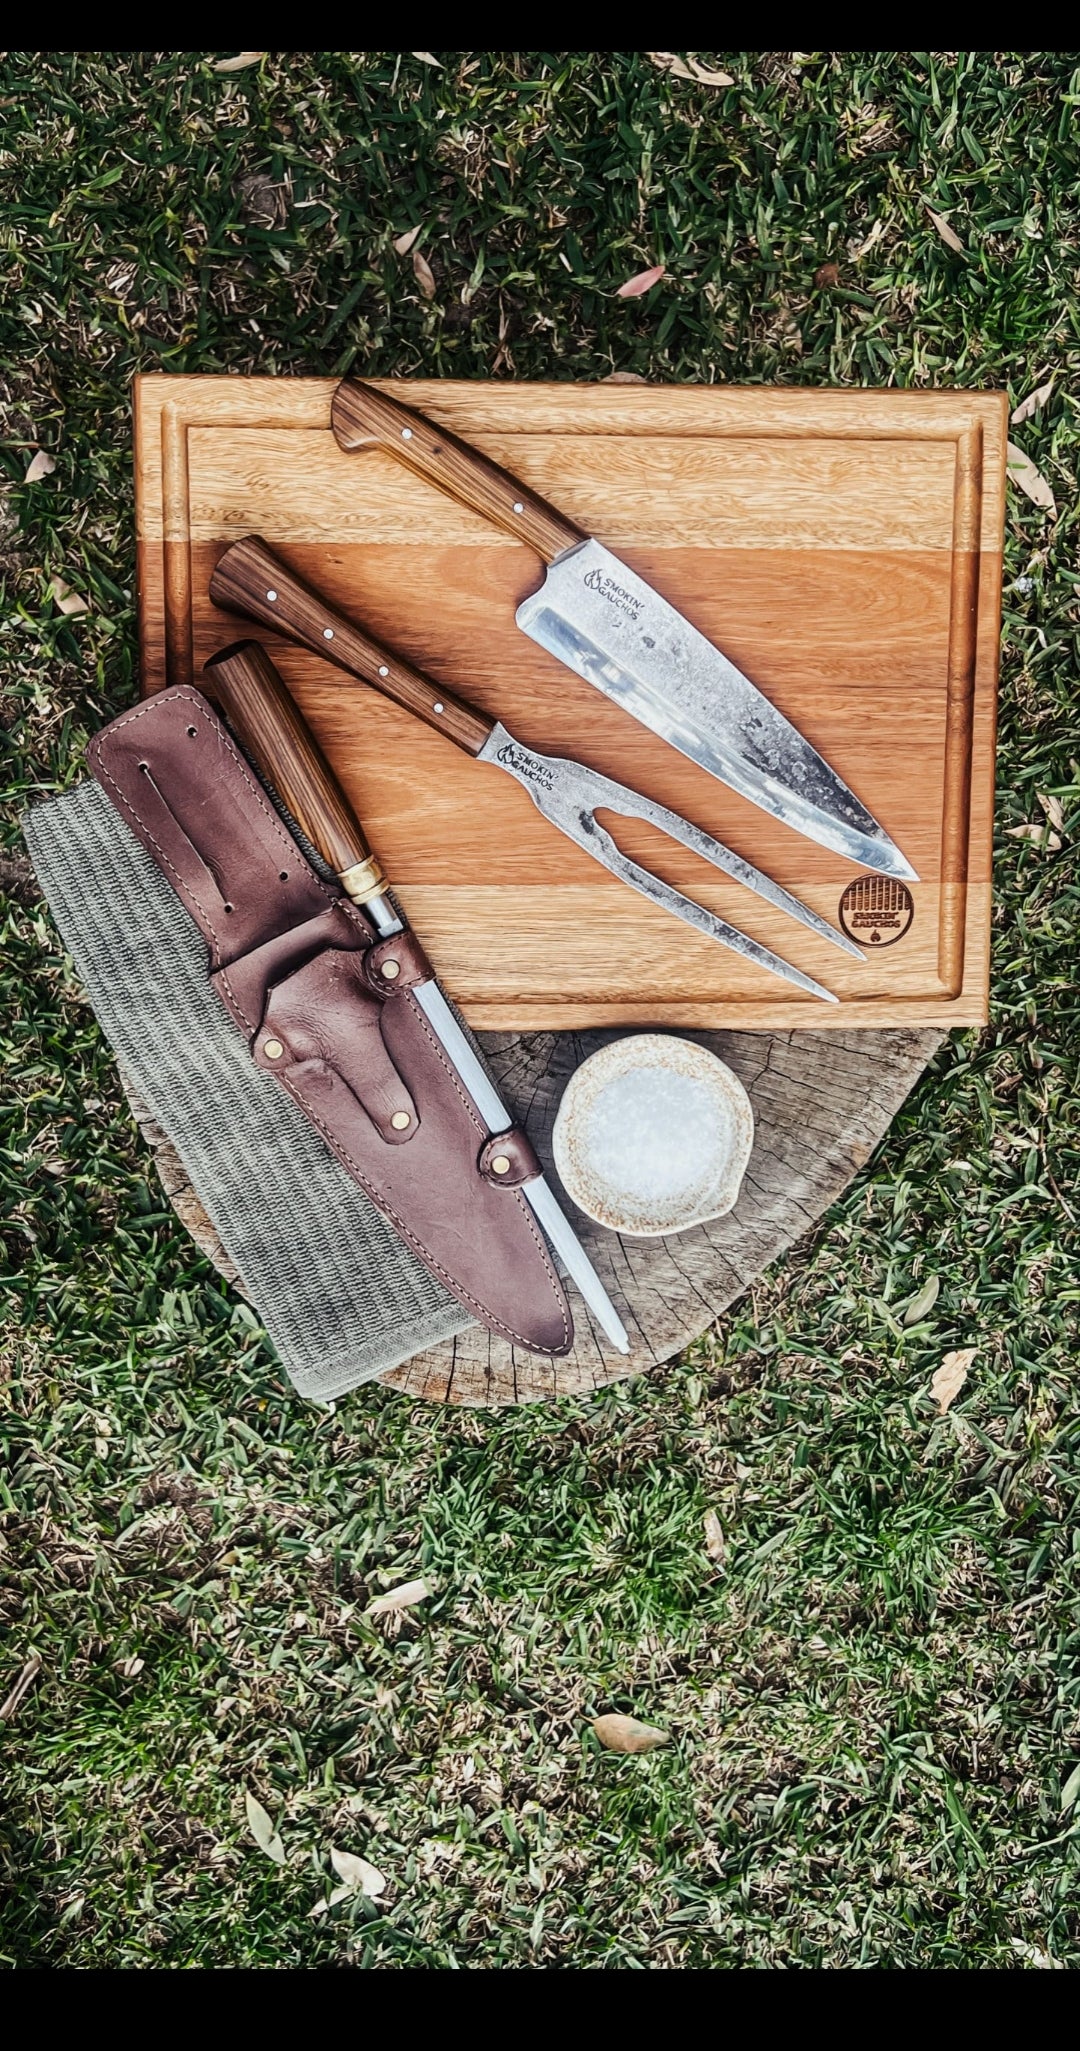 Handmade Carving Knife, Fork & Honing Steel Set + Leather Sheath